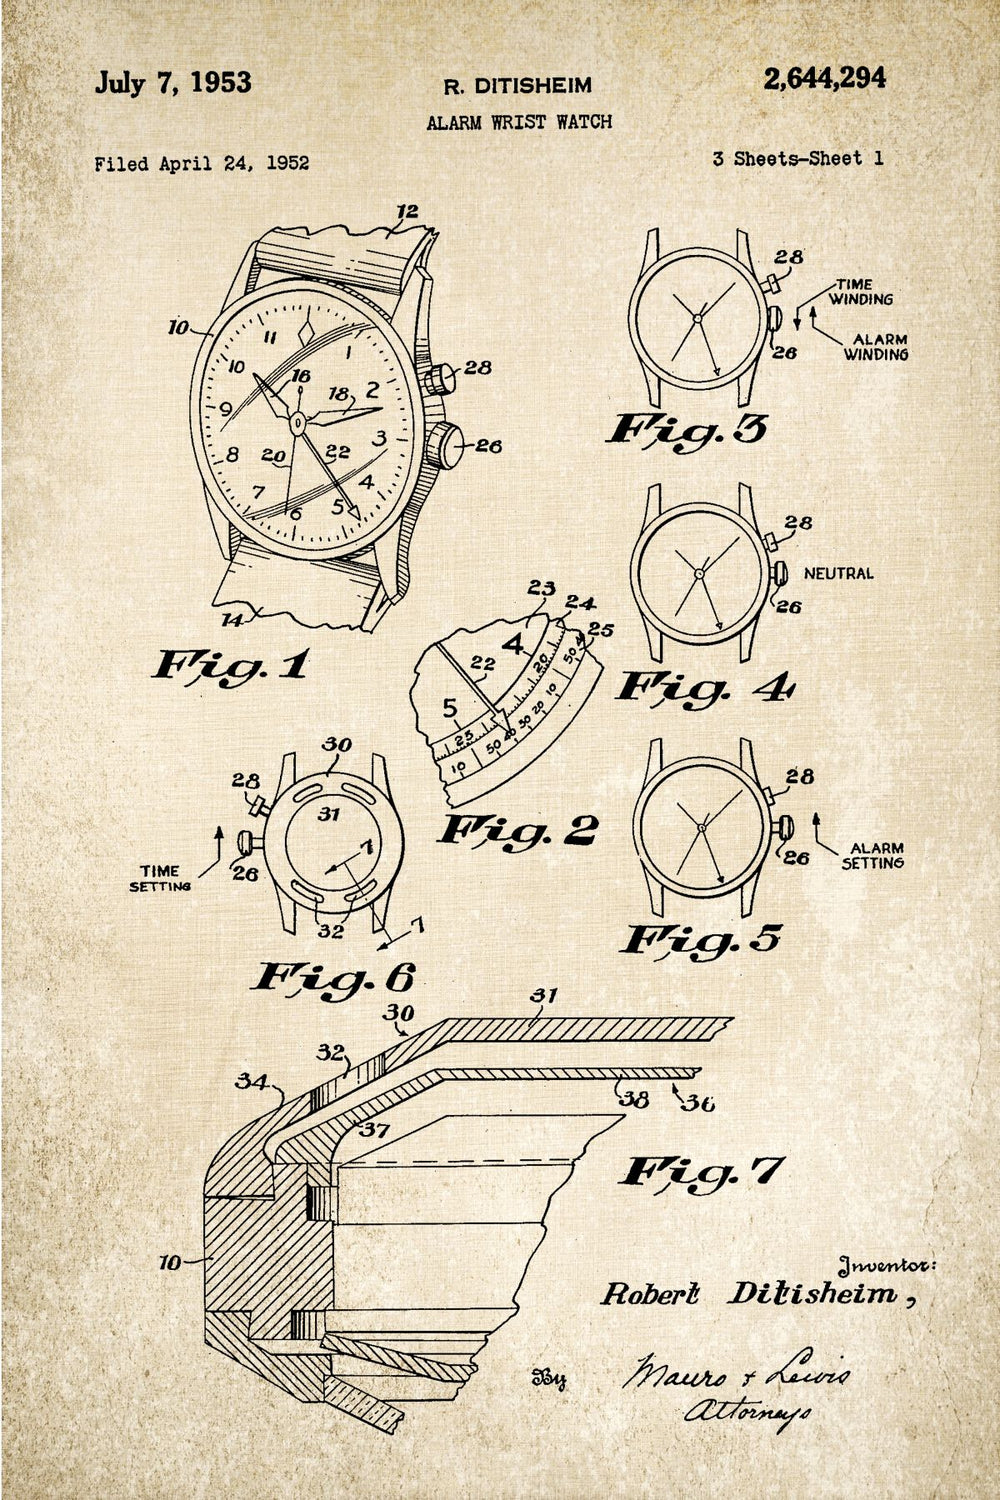 Alarm Wrist Watch Patent